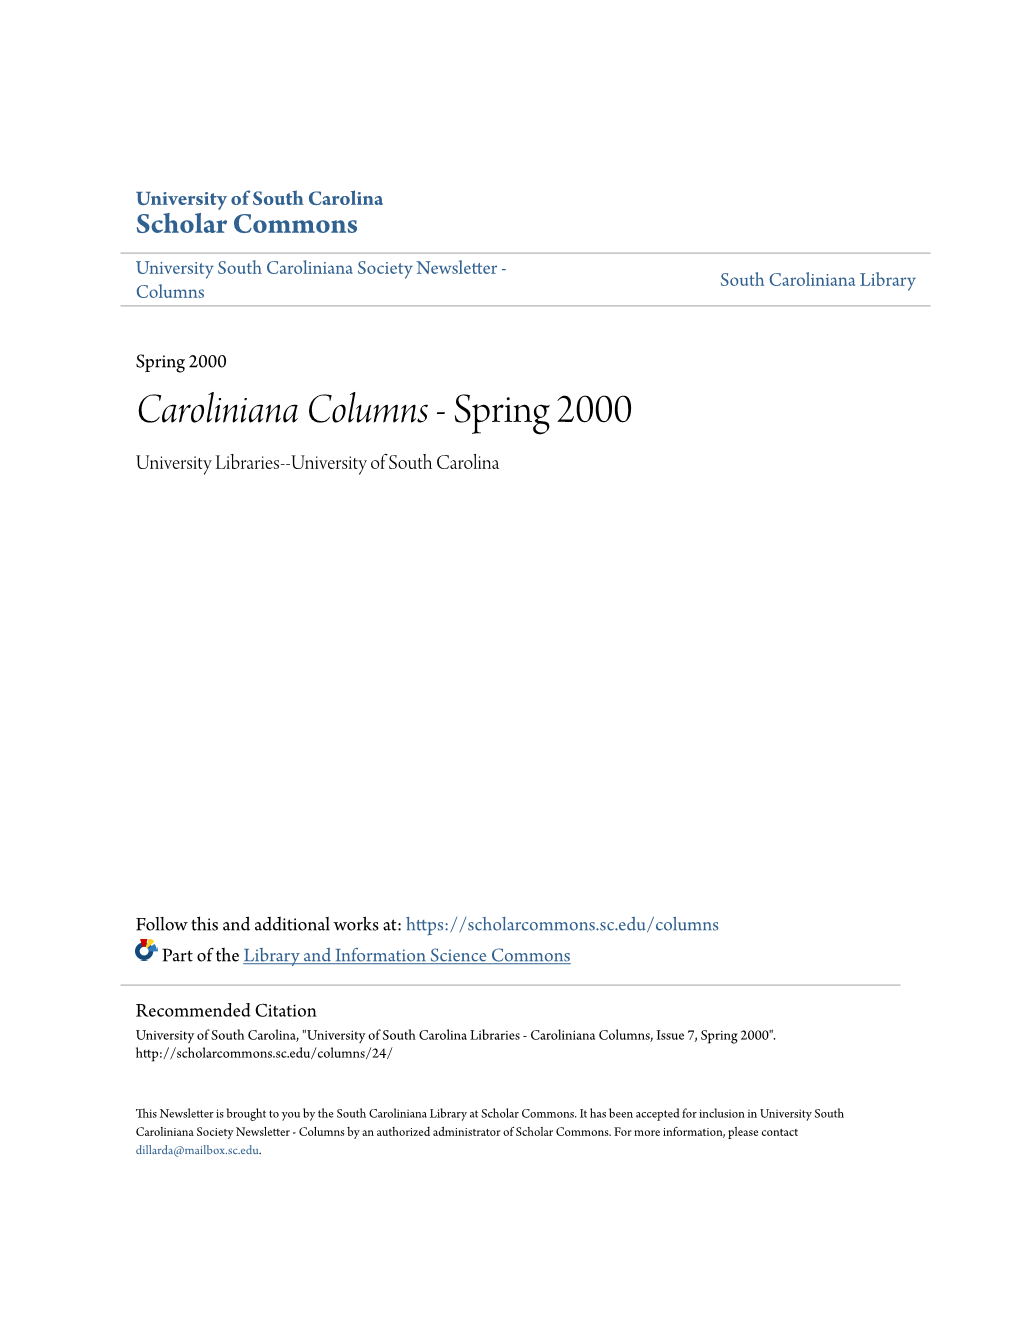 Caroliniana Columns - Spring 2000 University Libraries--University of South Carolina